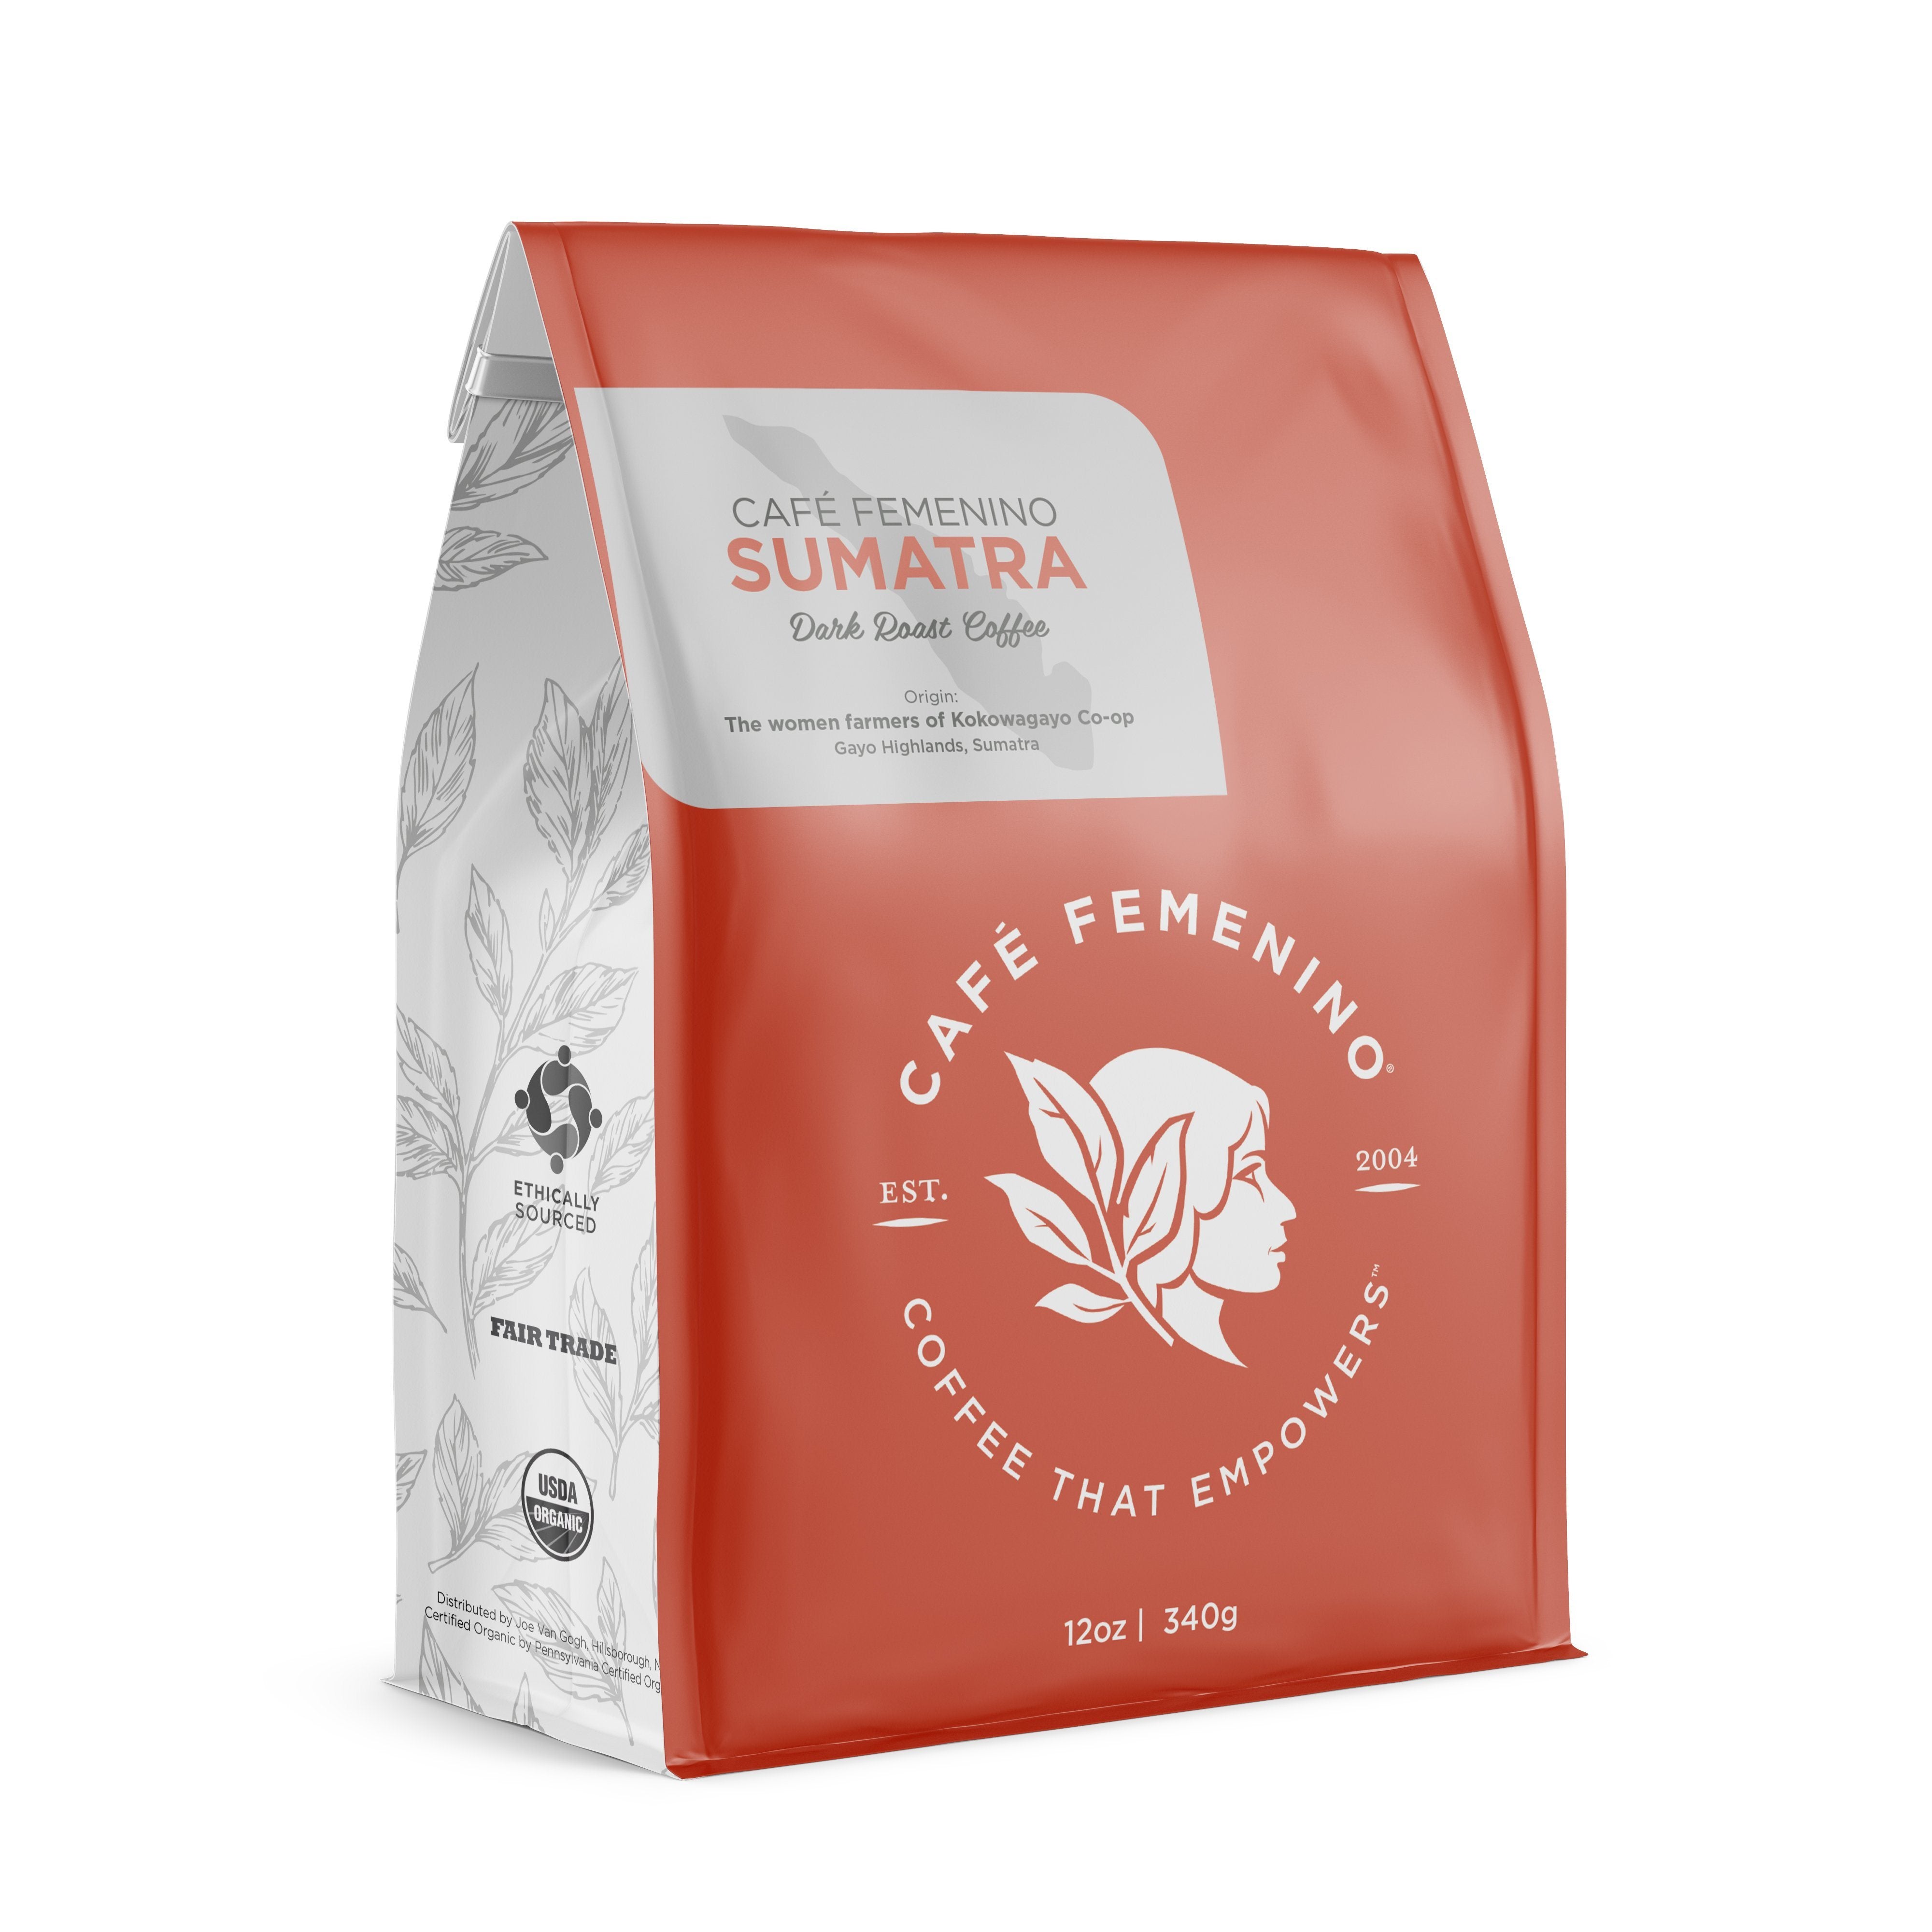 Café Femenino Organic Sumatra Gayo Highlands | Whole Bean Coffee or Ground